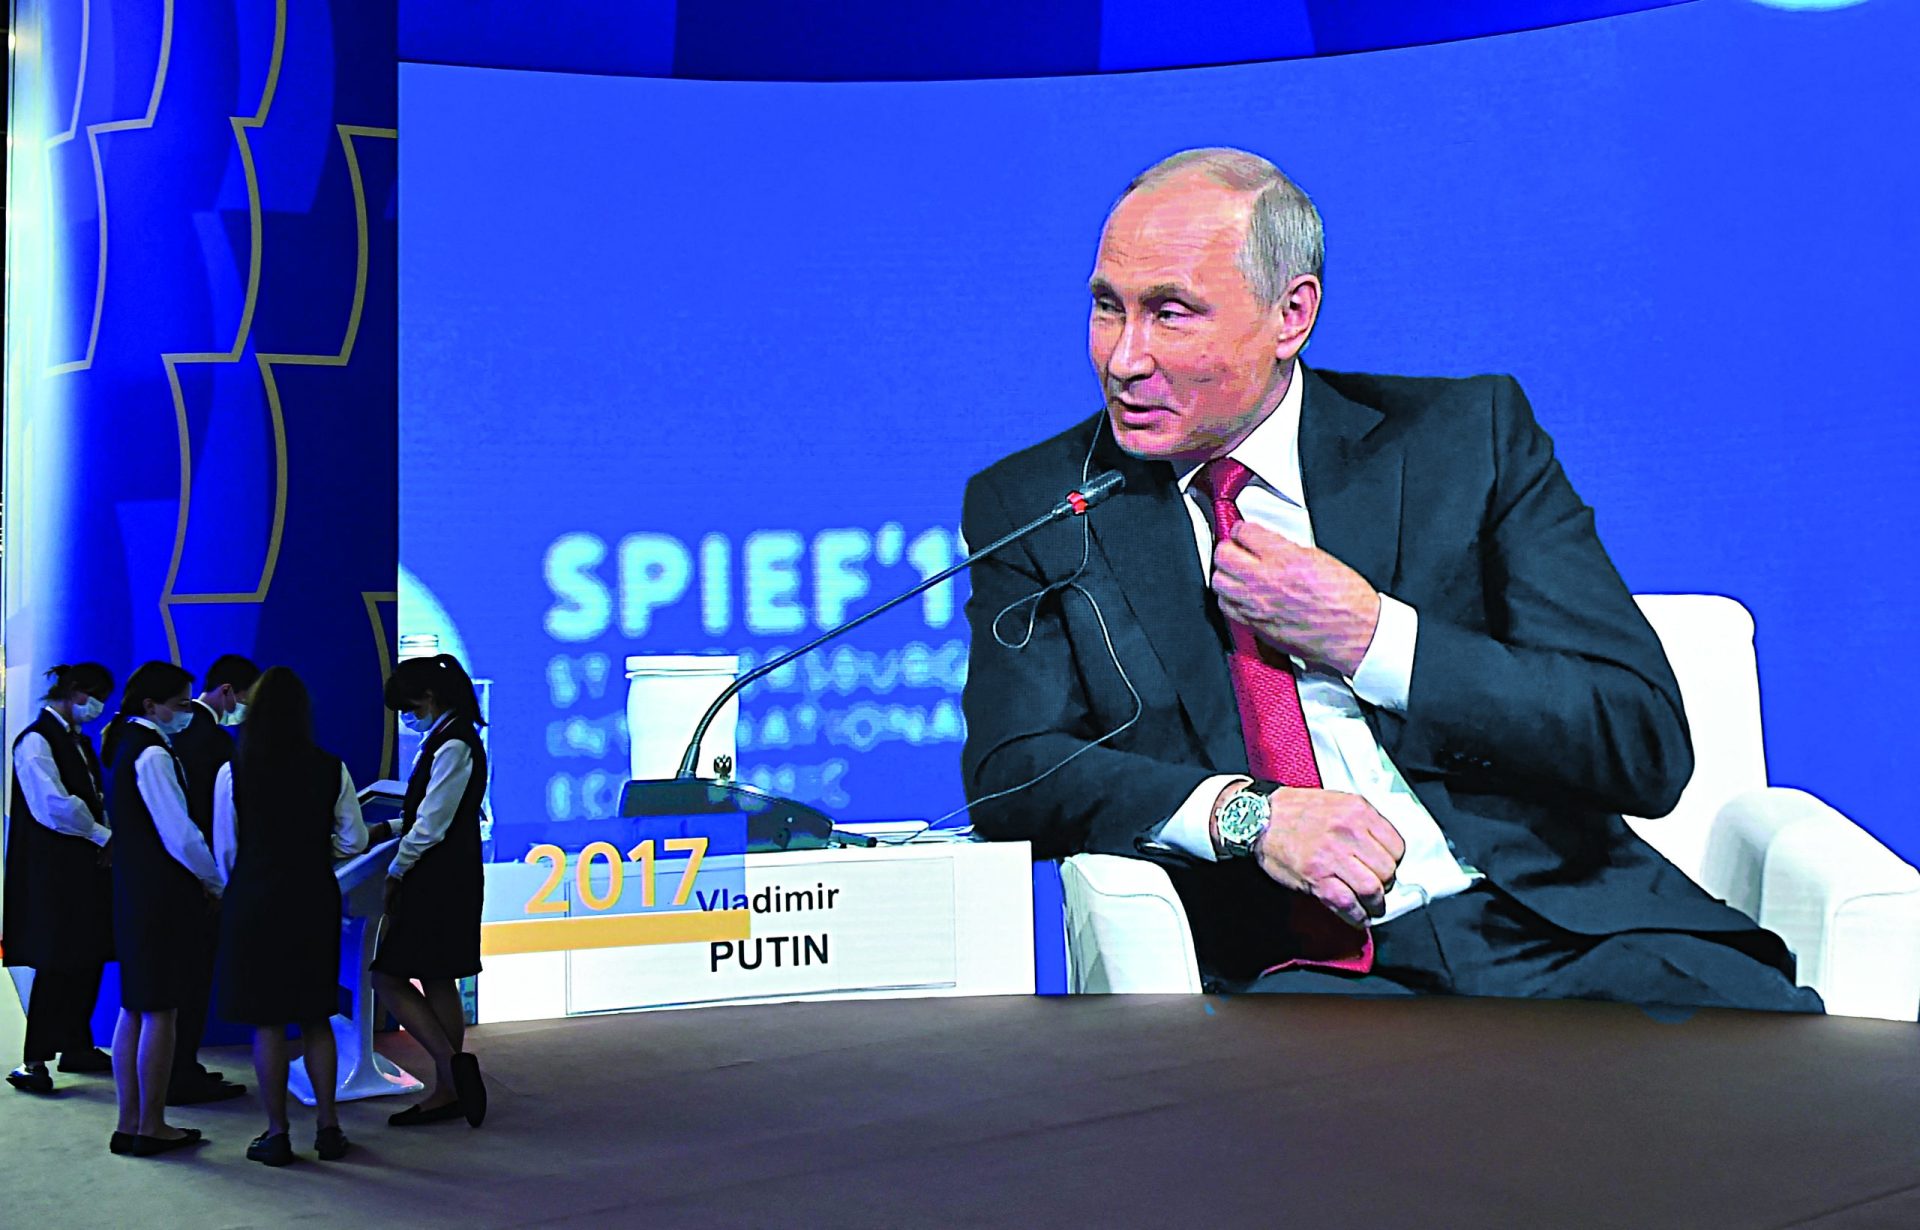 Kremlin tenta conseguir investimento estrangeiro com a &#8220;Davos russa&#8221;